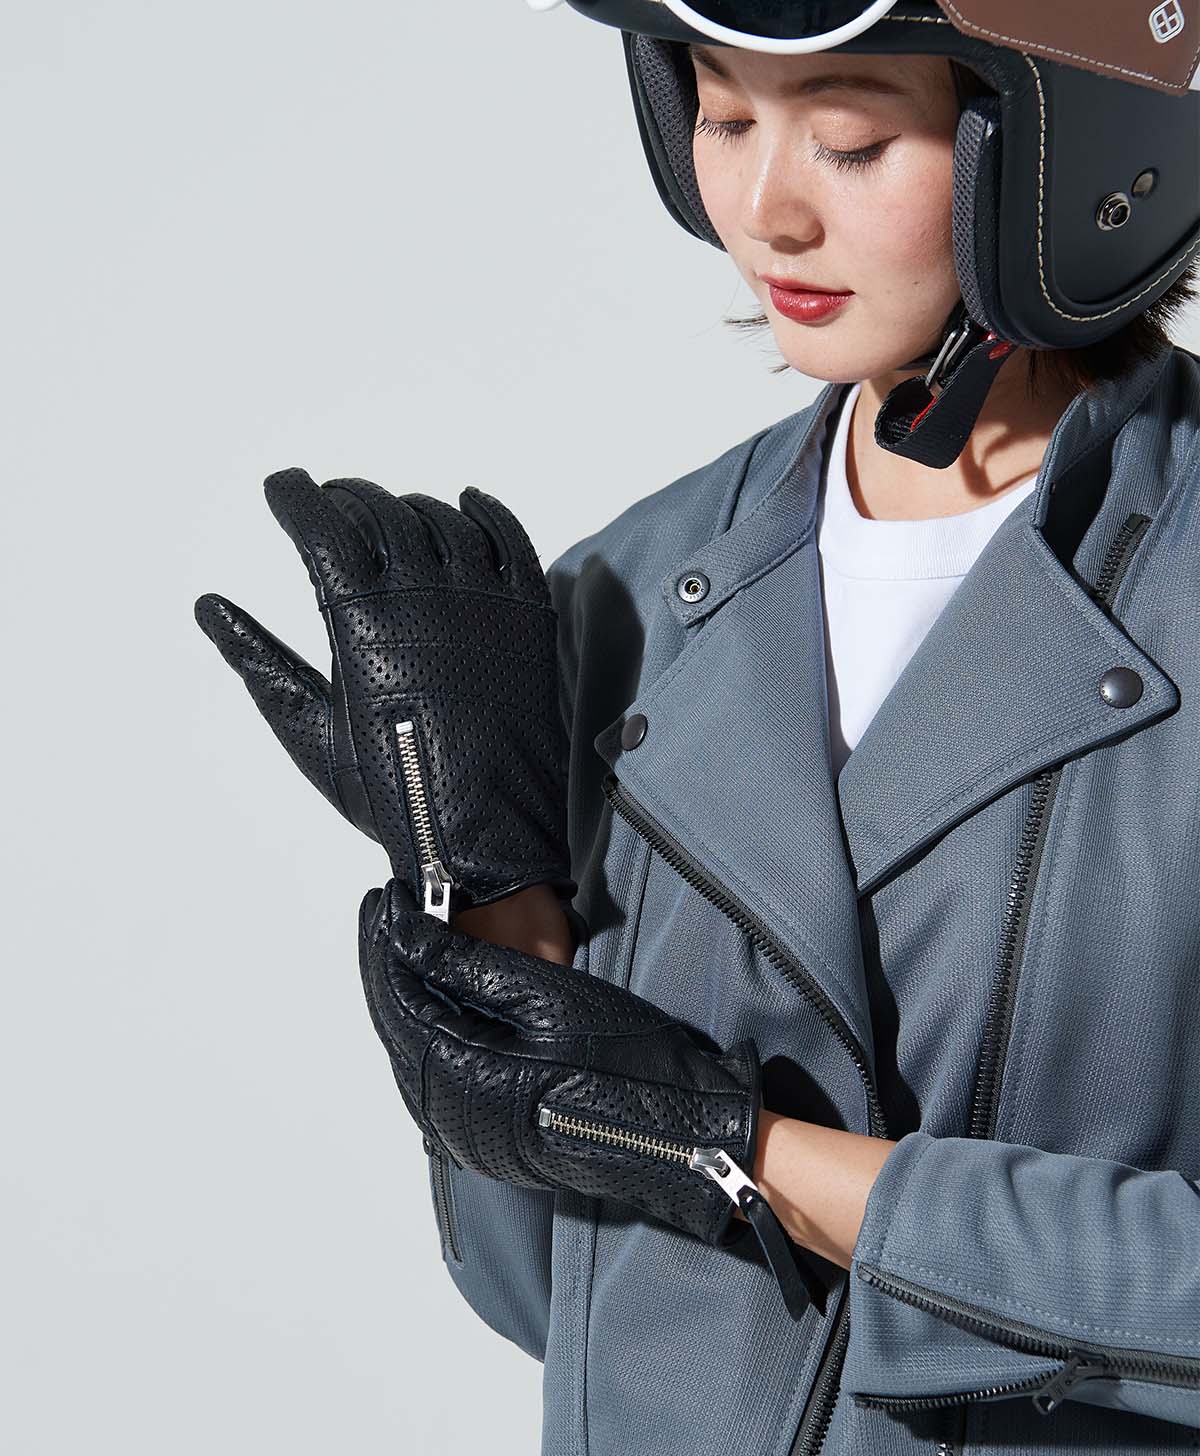 Rox Glove -pl / Black (feminino)